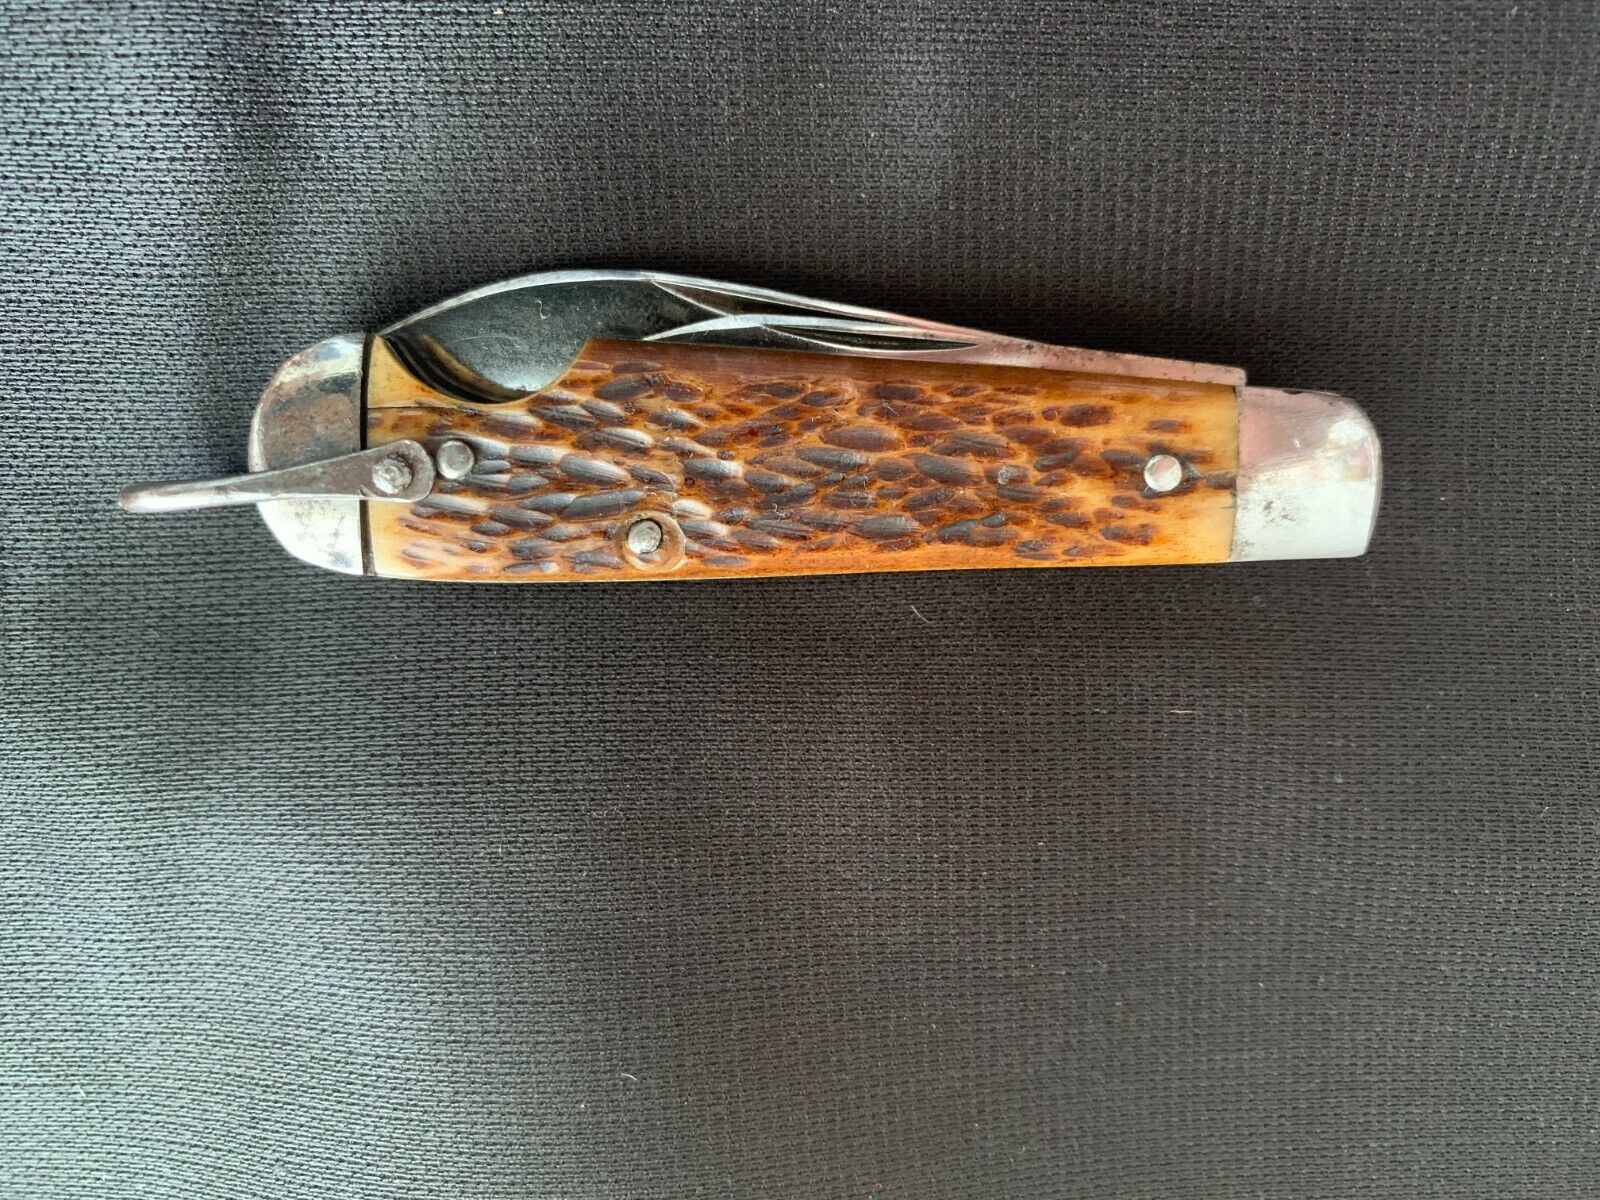 EASY OPENER JACK IMPERIAL USA POCKET KNIFE VINTAGE (most likely WW11 era)